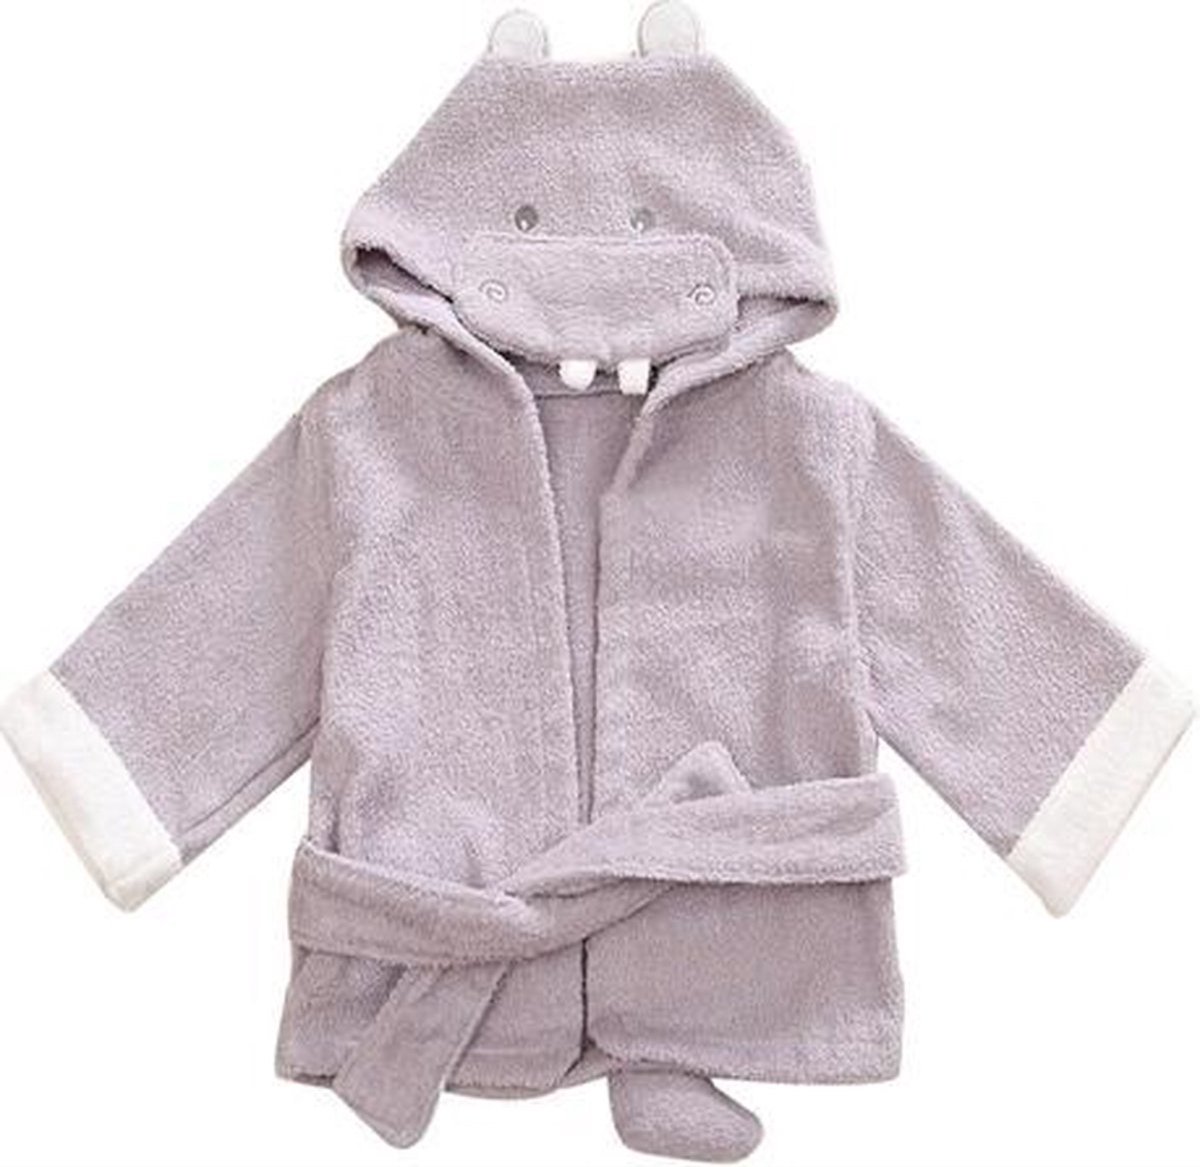 CHPN - Badjasje - Baby badjas - Badjas voor je kindje - Nijlpaard - Met kam en borsteltje - Universeel - Schattig badjasje